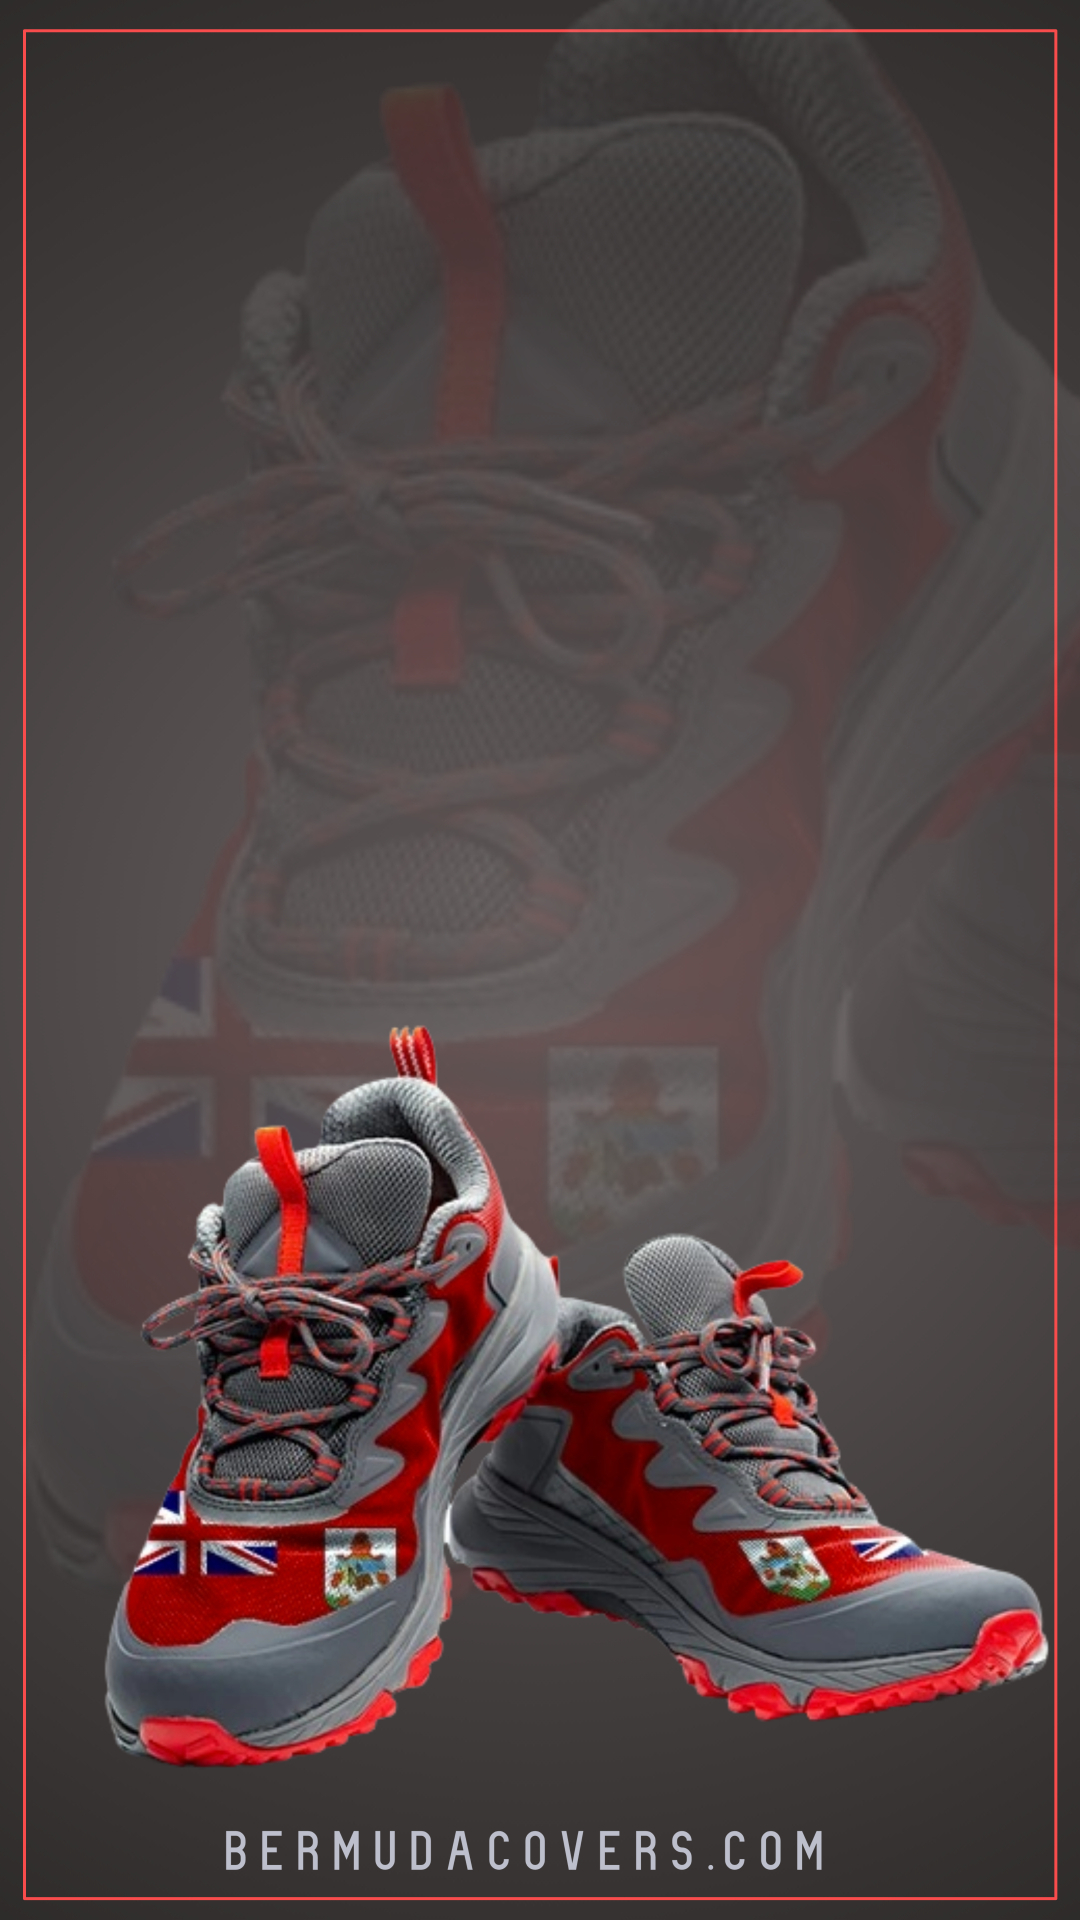 Just for kicks red Bermuda sneakers social media graphic cover 43532532 (2)